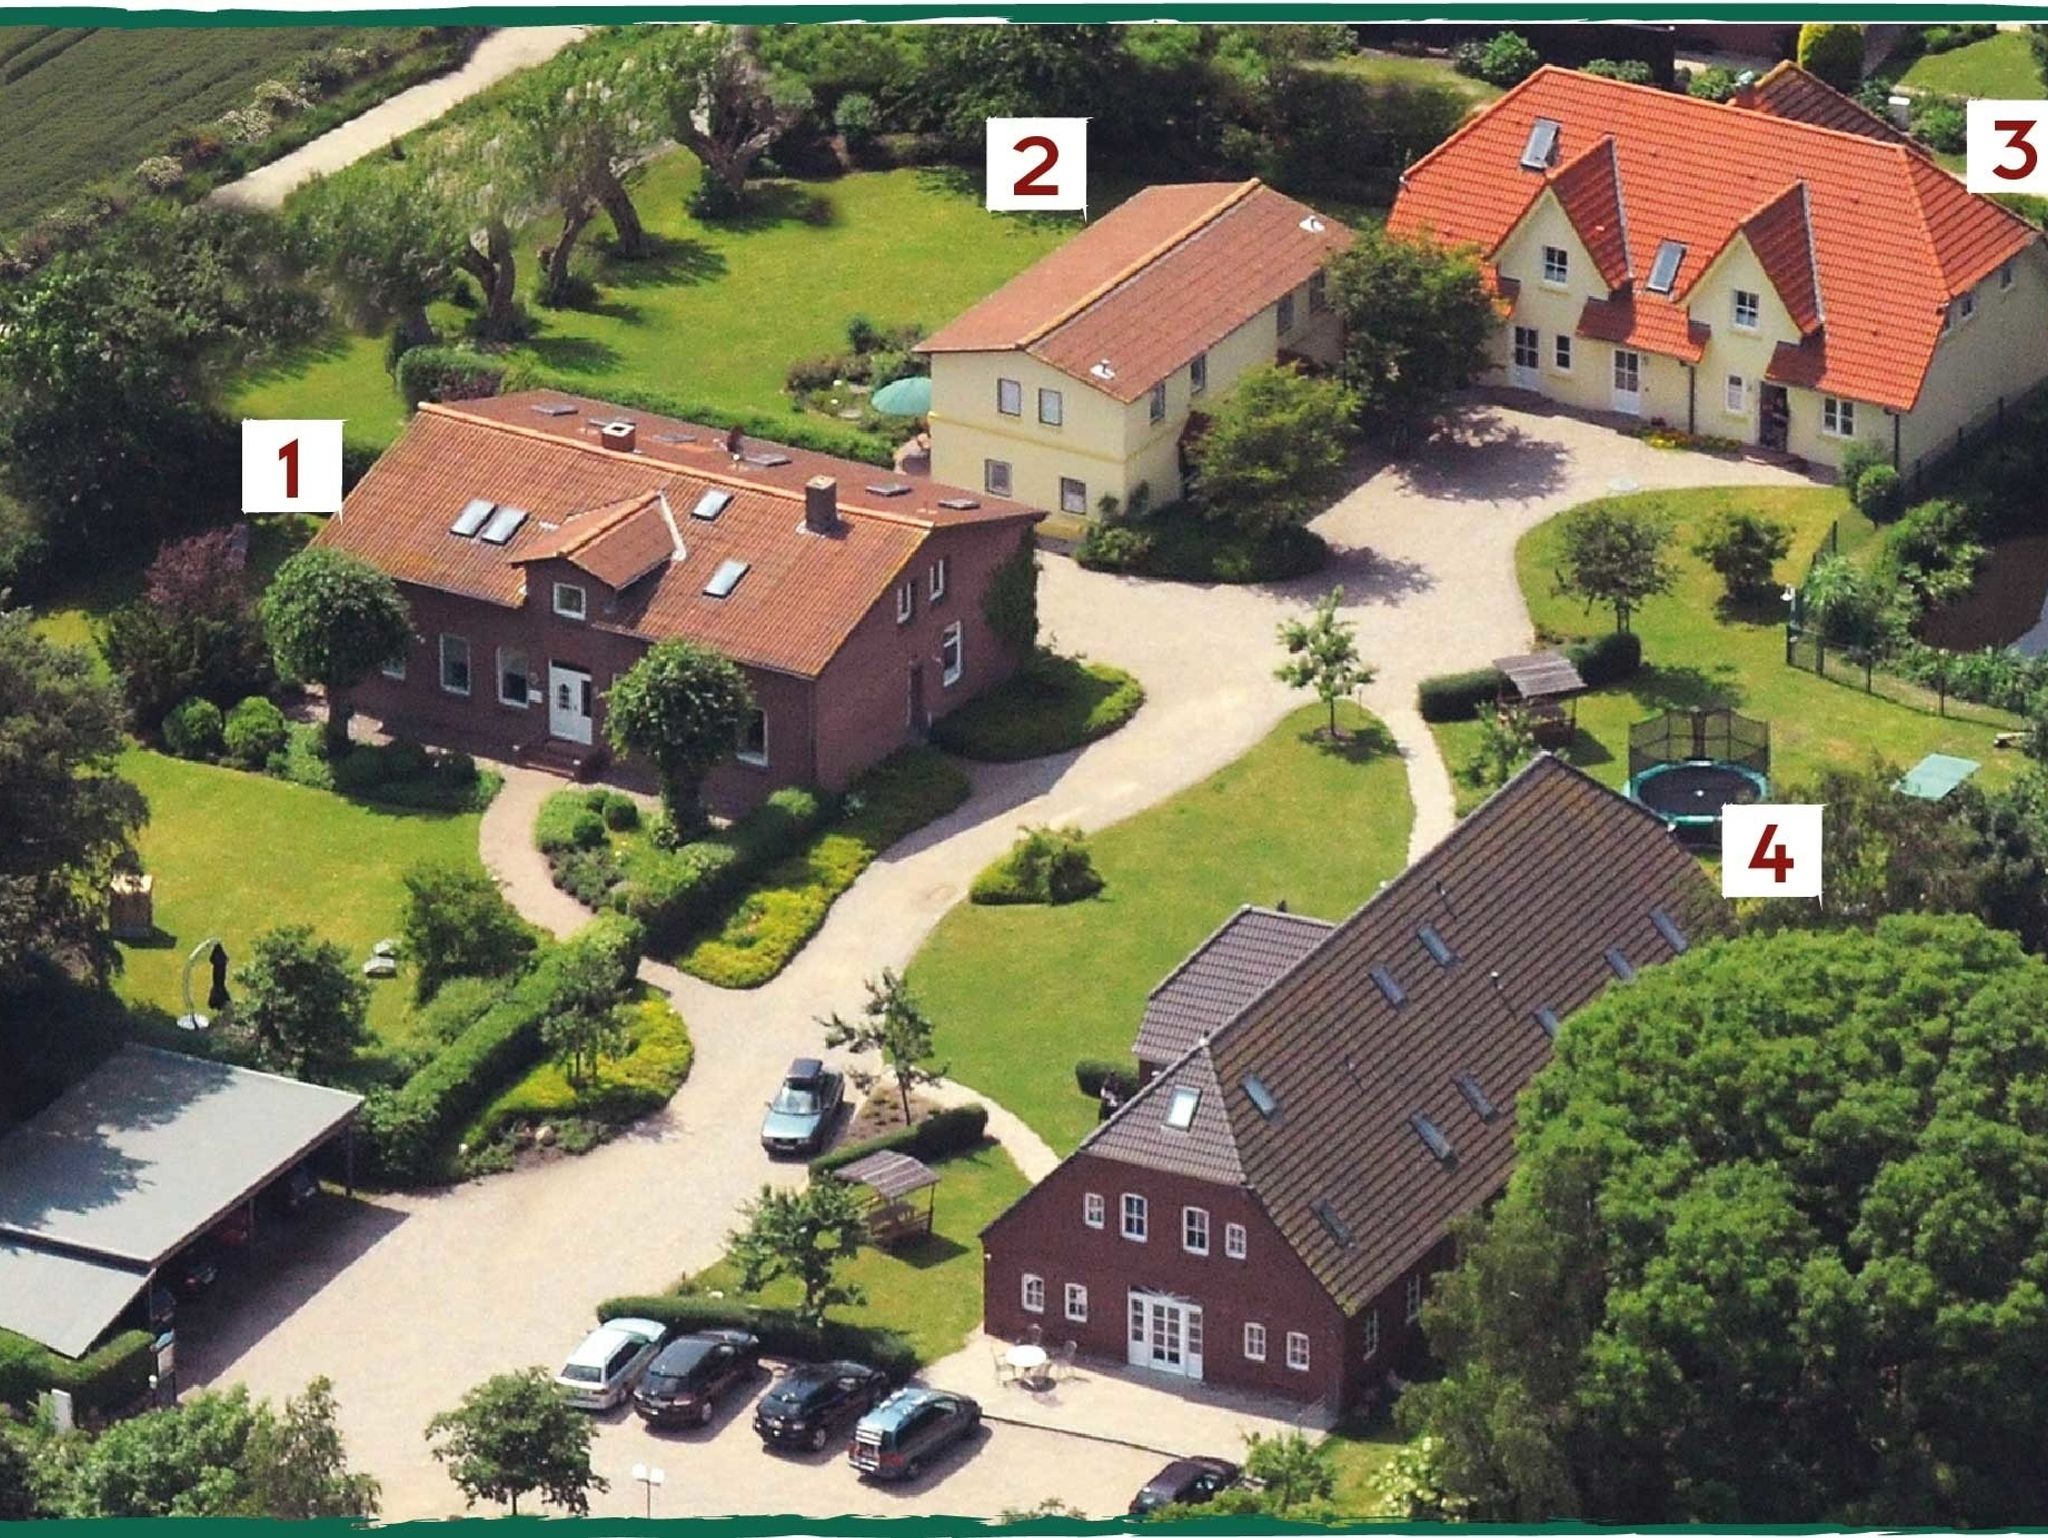 Bonna's Ostsee Oase - Haus Baltic - Whg. 180 - Inkl. gratis WLAN und Saisonstrandkorb